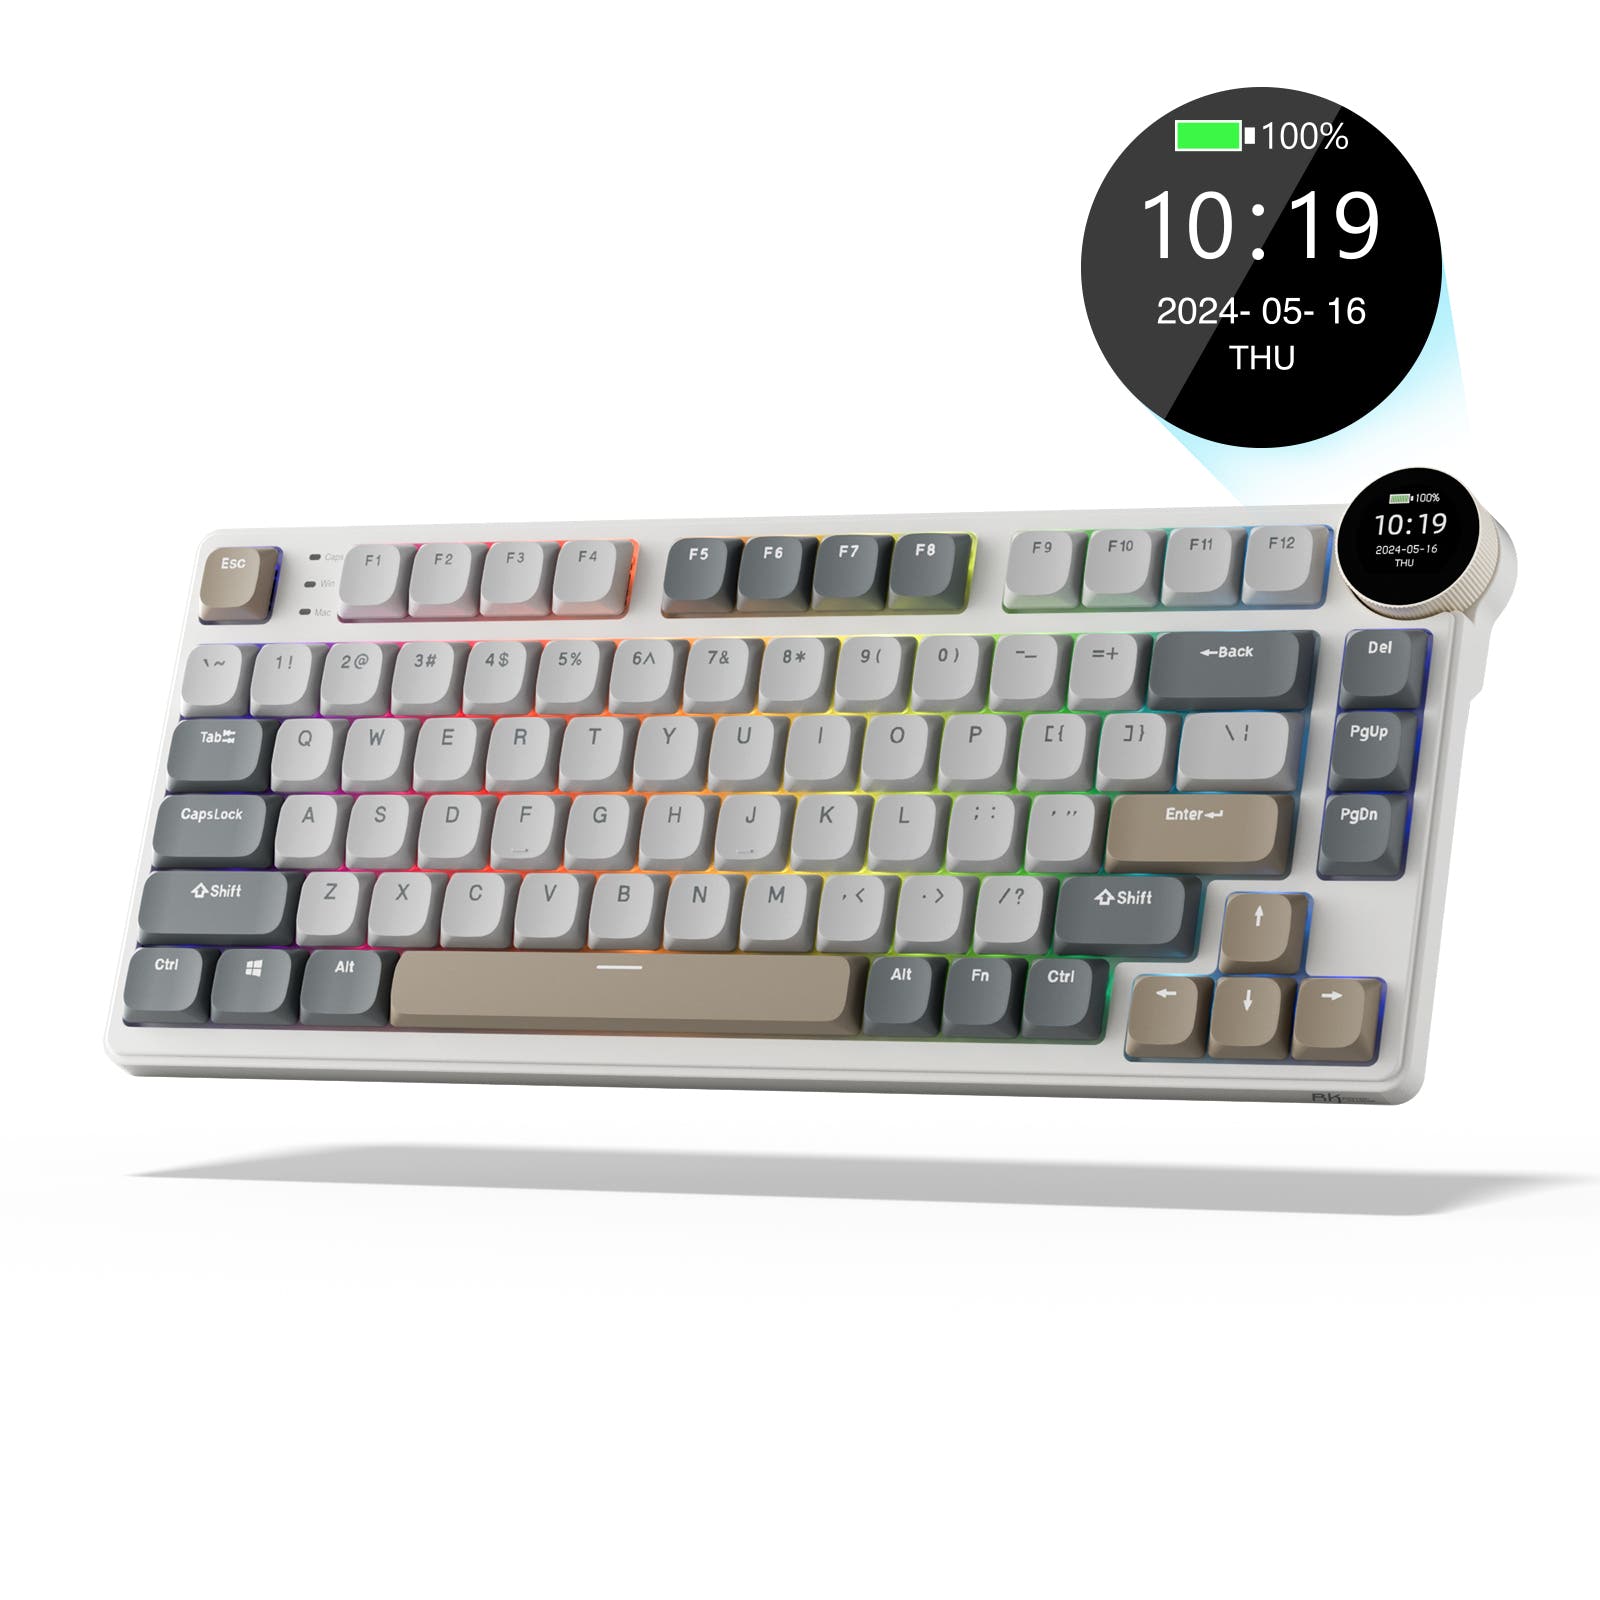 N80 Low-Profile Mechanical Keyboard